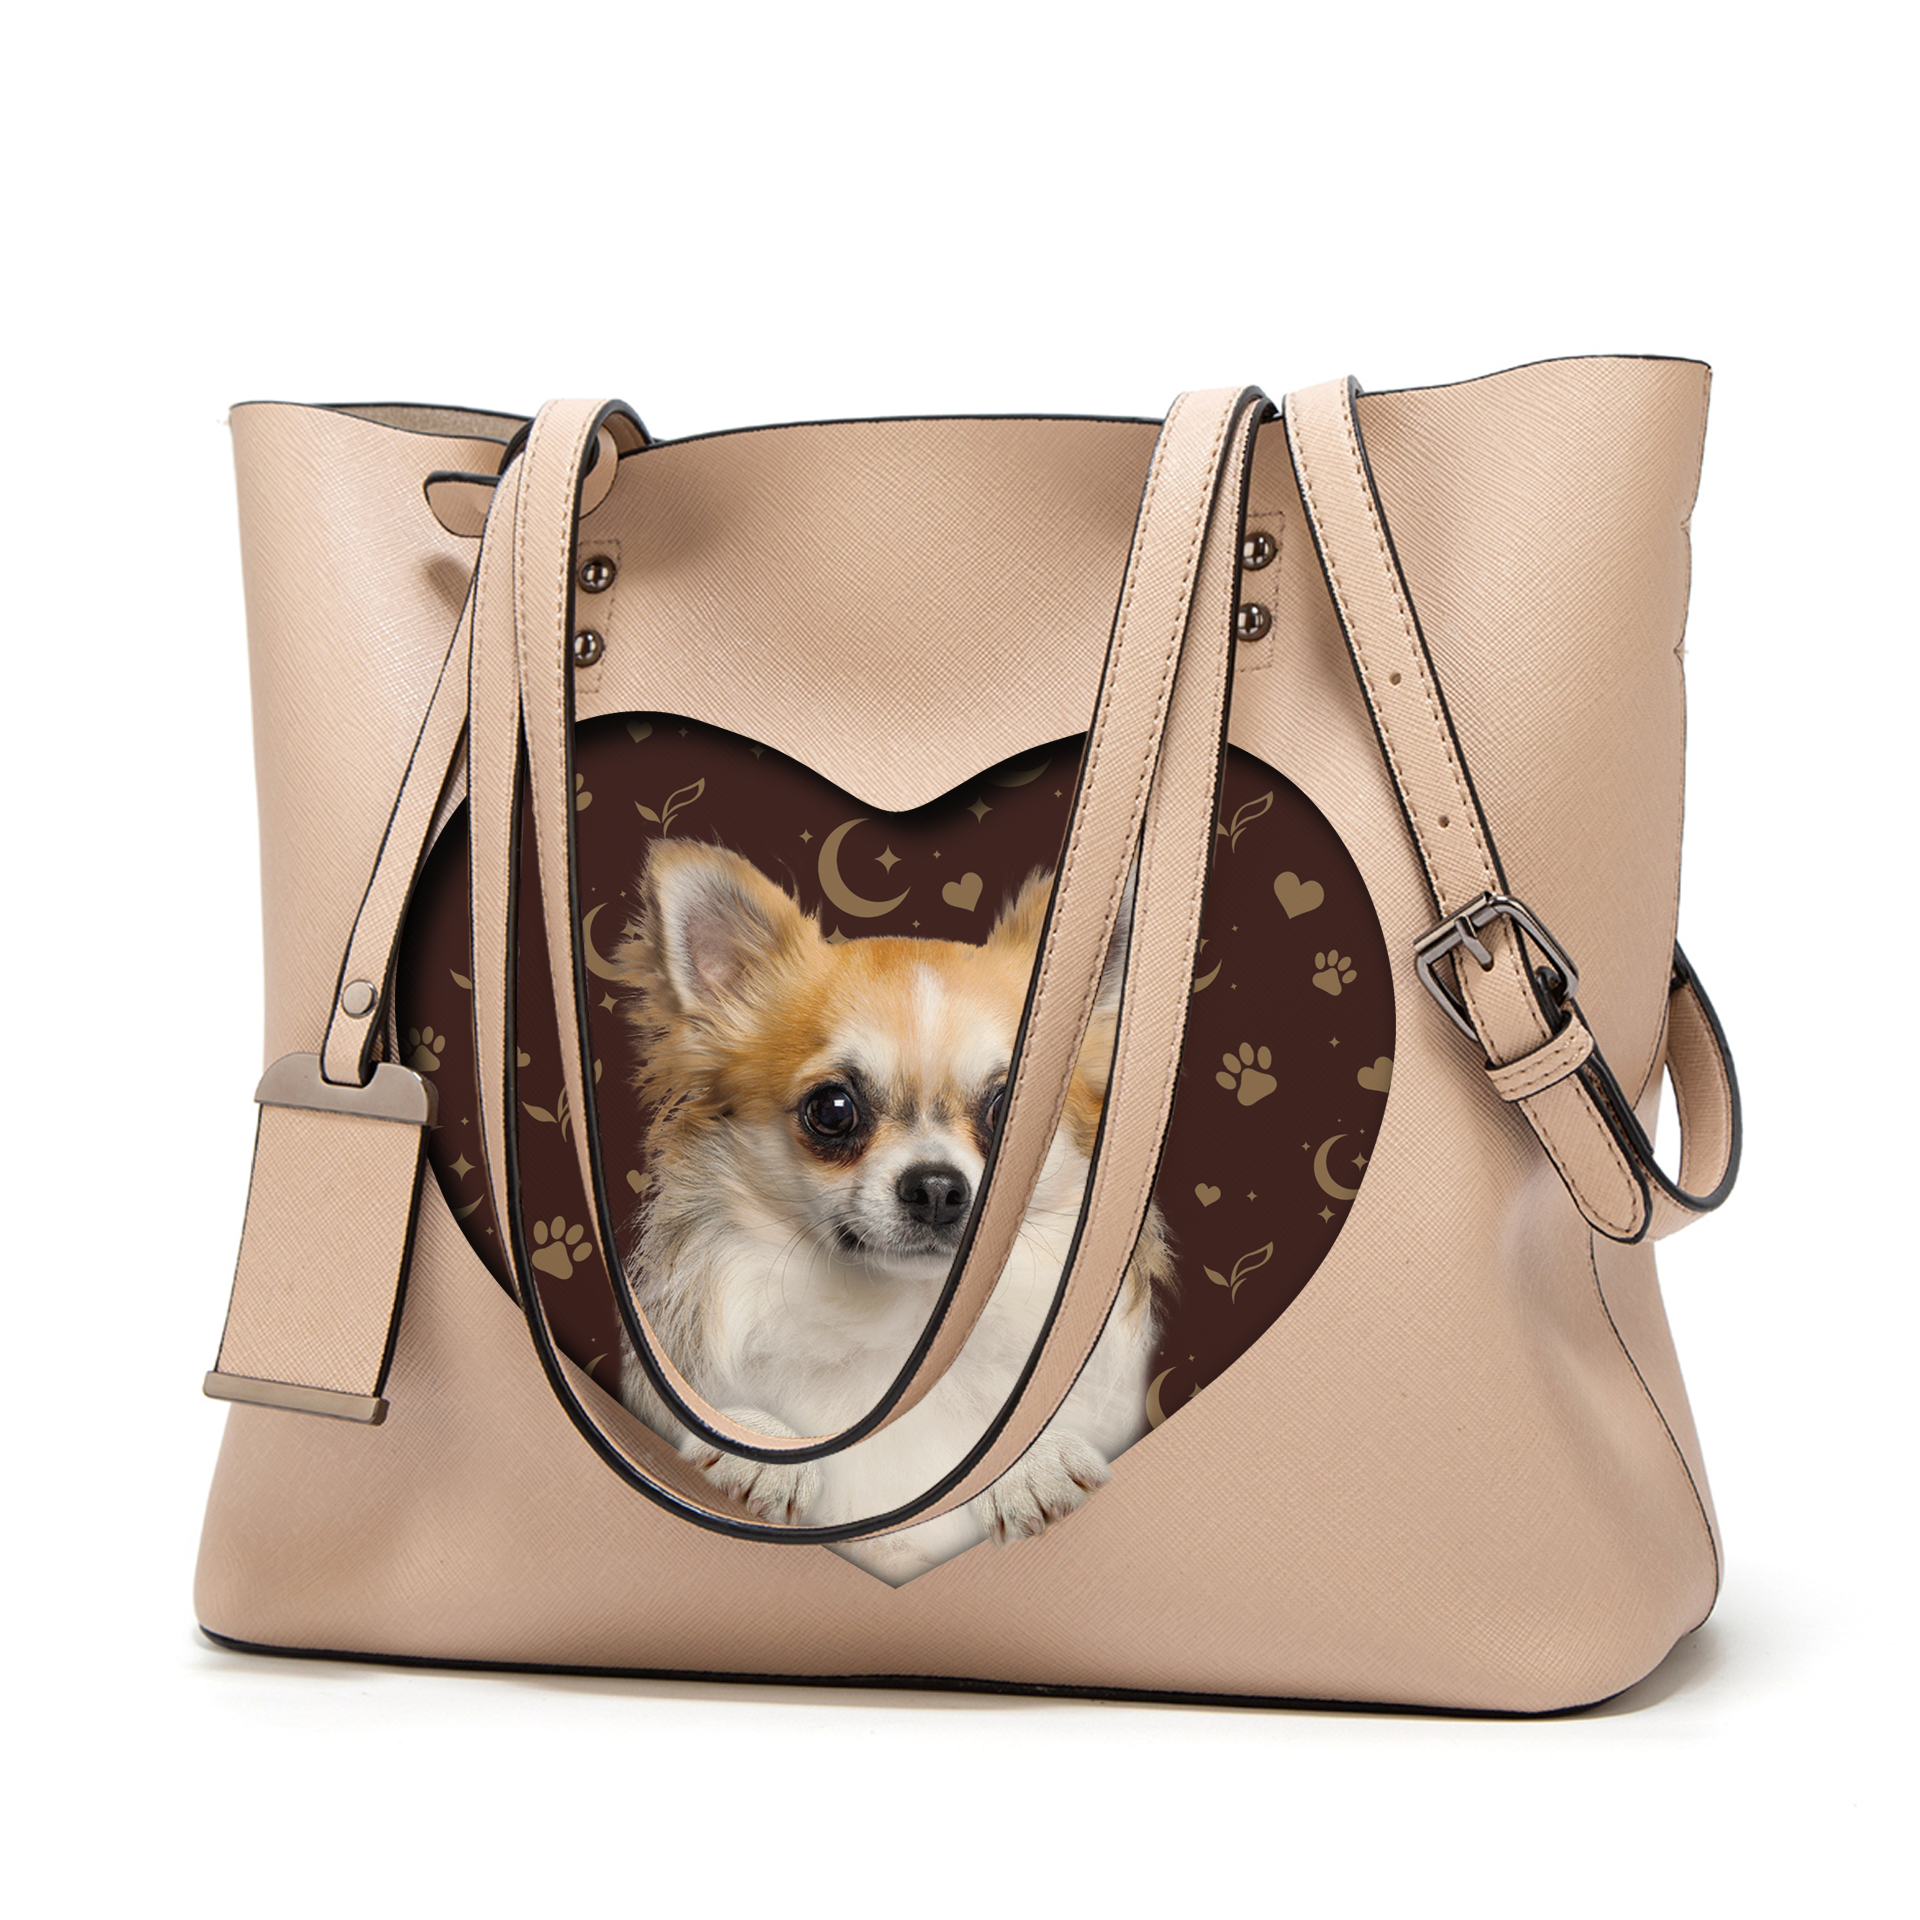 I Know I'm Cute - Chihuahua Glamour Handbag V4 - 5